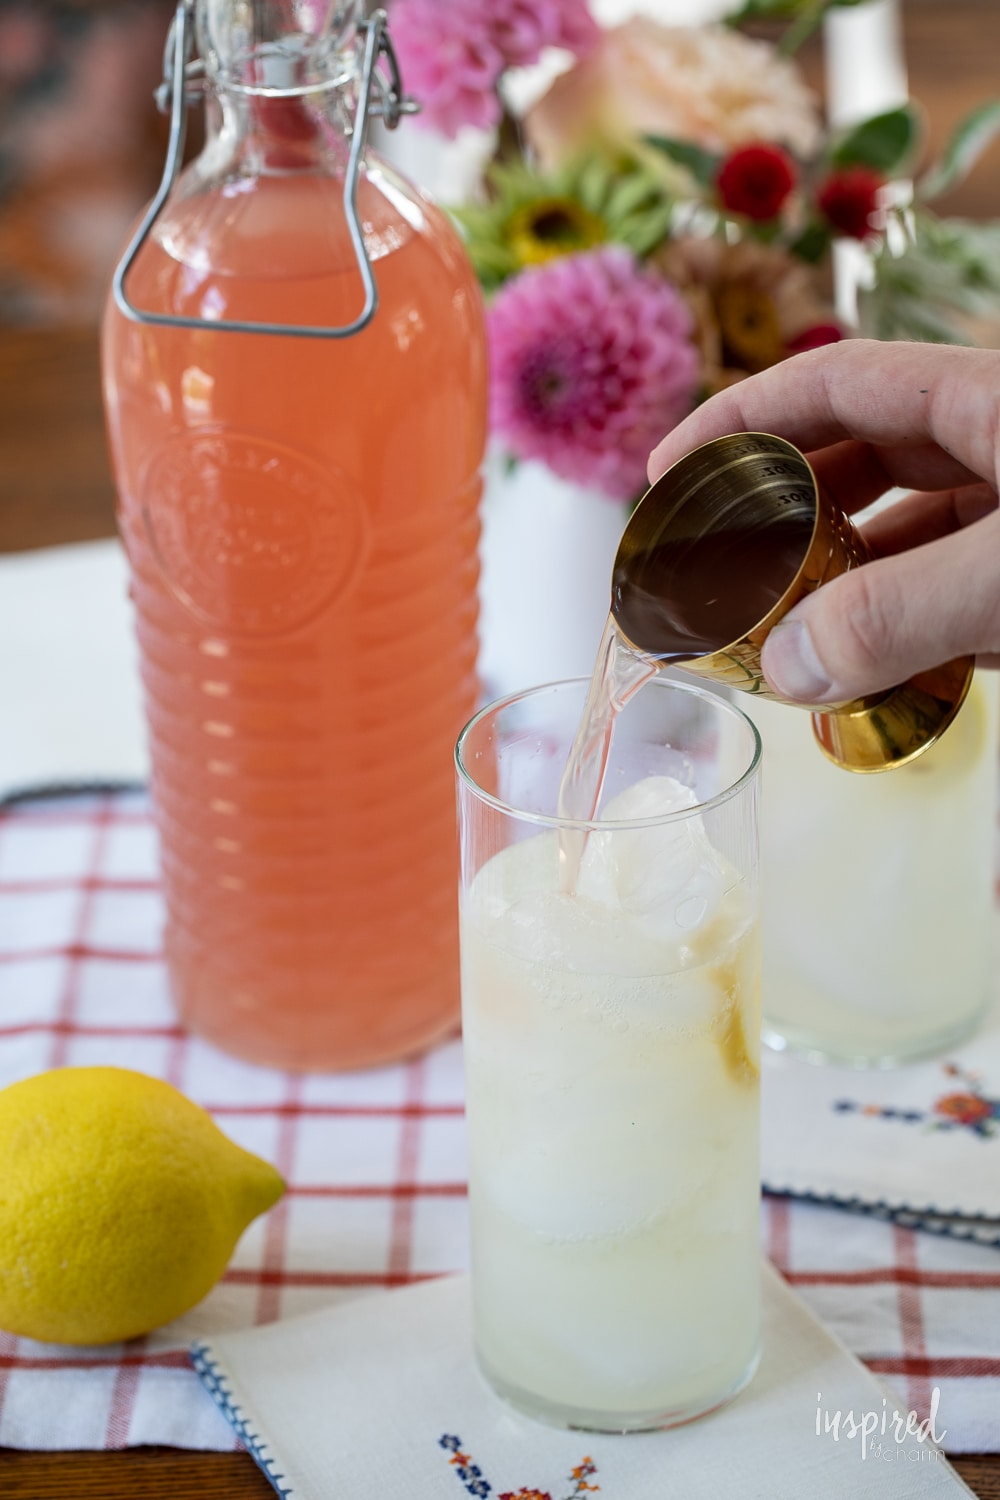 adding a shot of homemade rhubarb ginger vodka into lemonade.